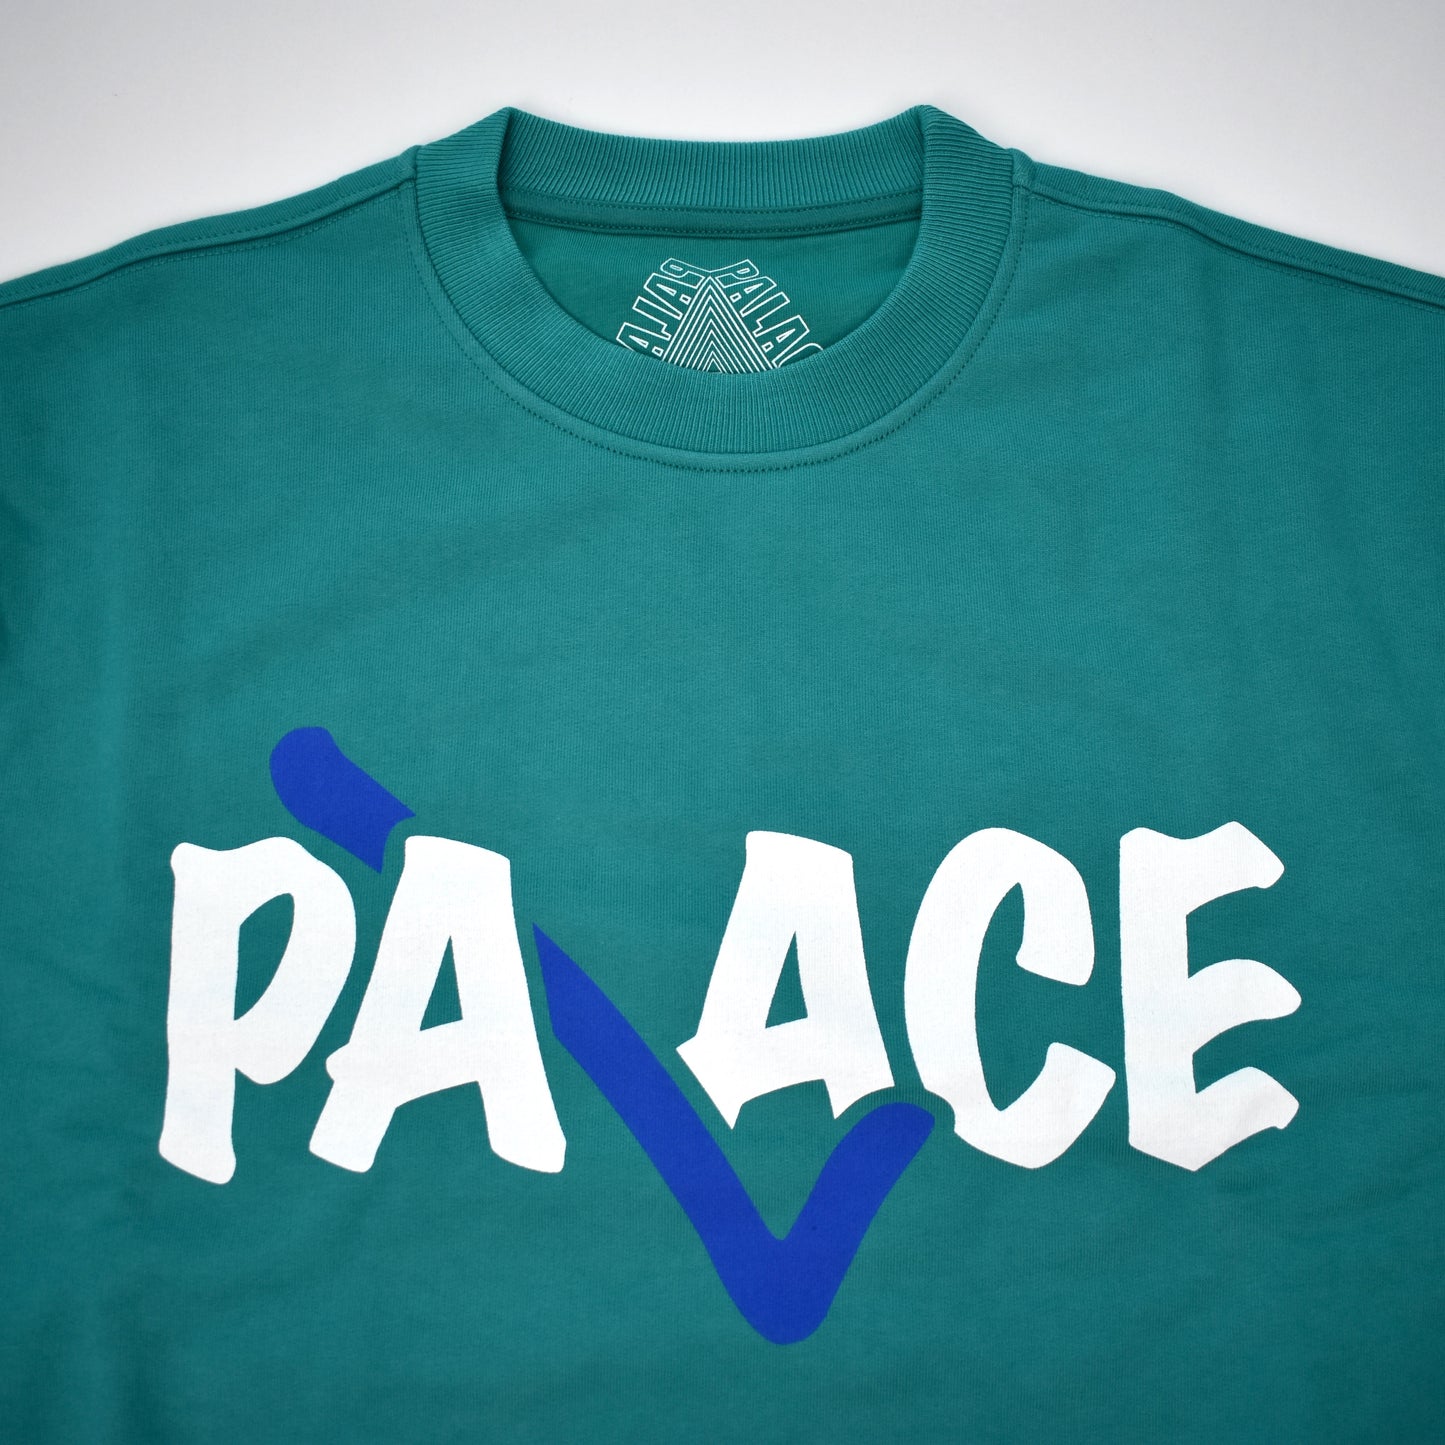 Palace - Teal Correct Logo Sweatshirt